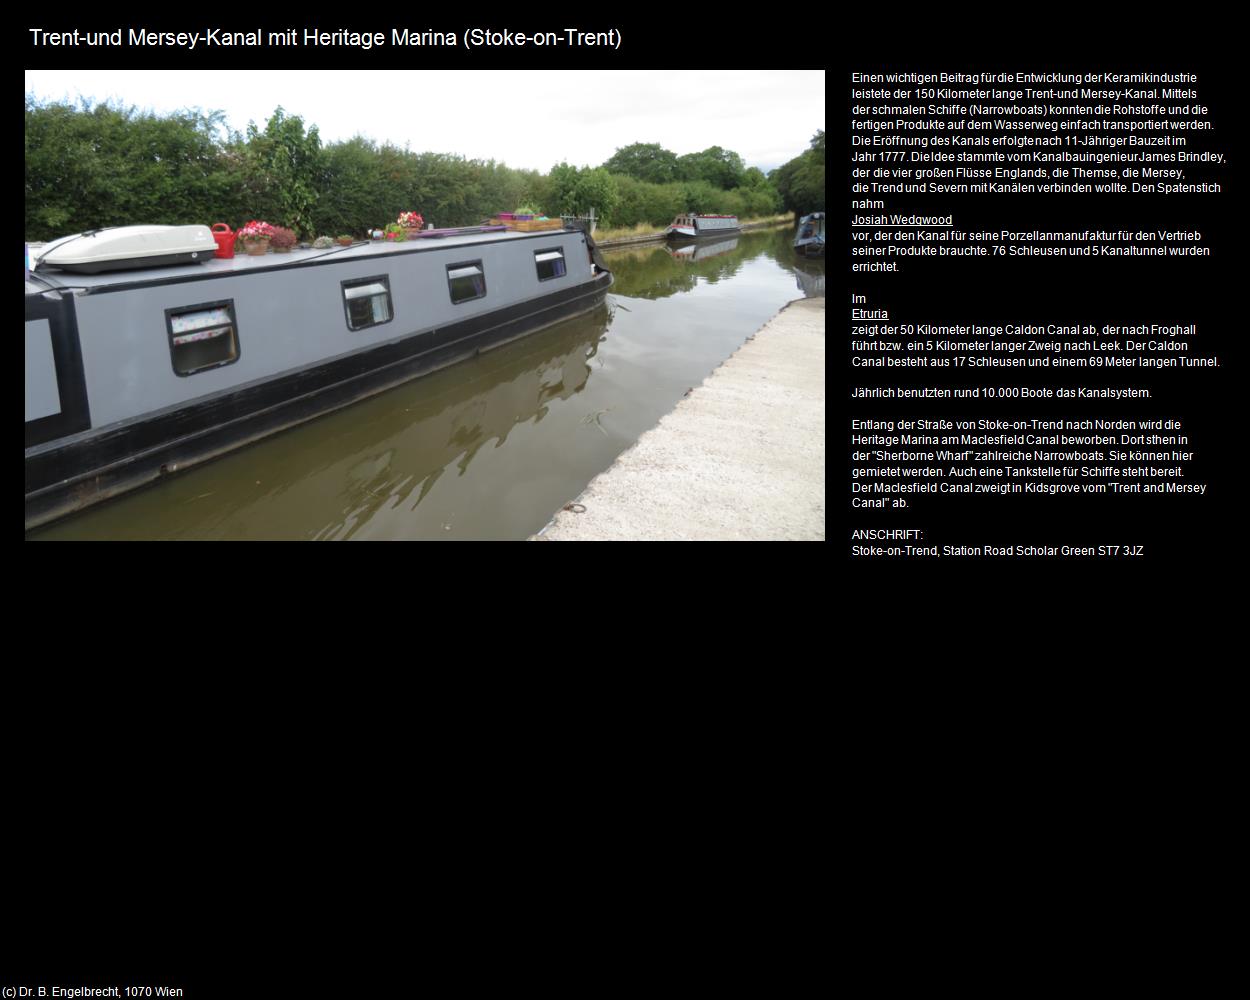 Trent-und Mersey-Kanal  (Stoke-on-Trent, England) in Kulturatlas-ENGLAND und WALES(c)B.Engelbrecht